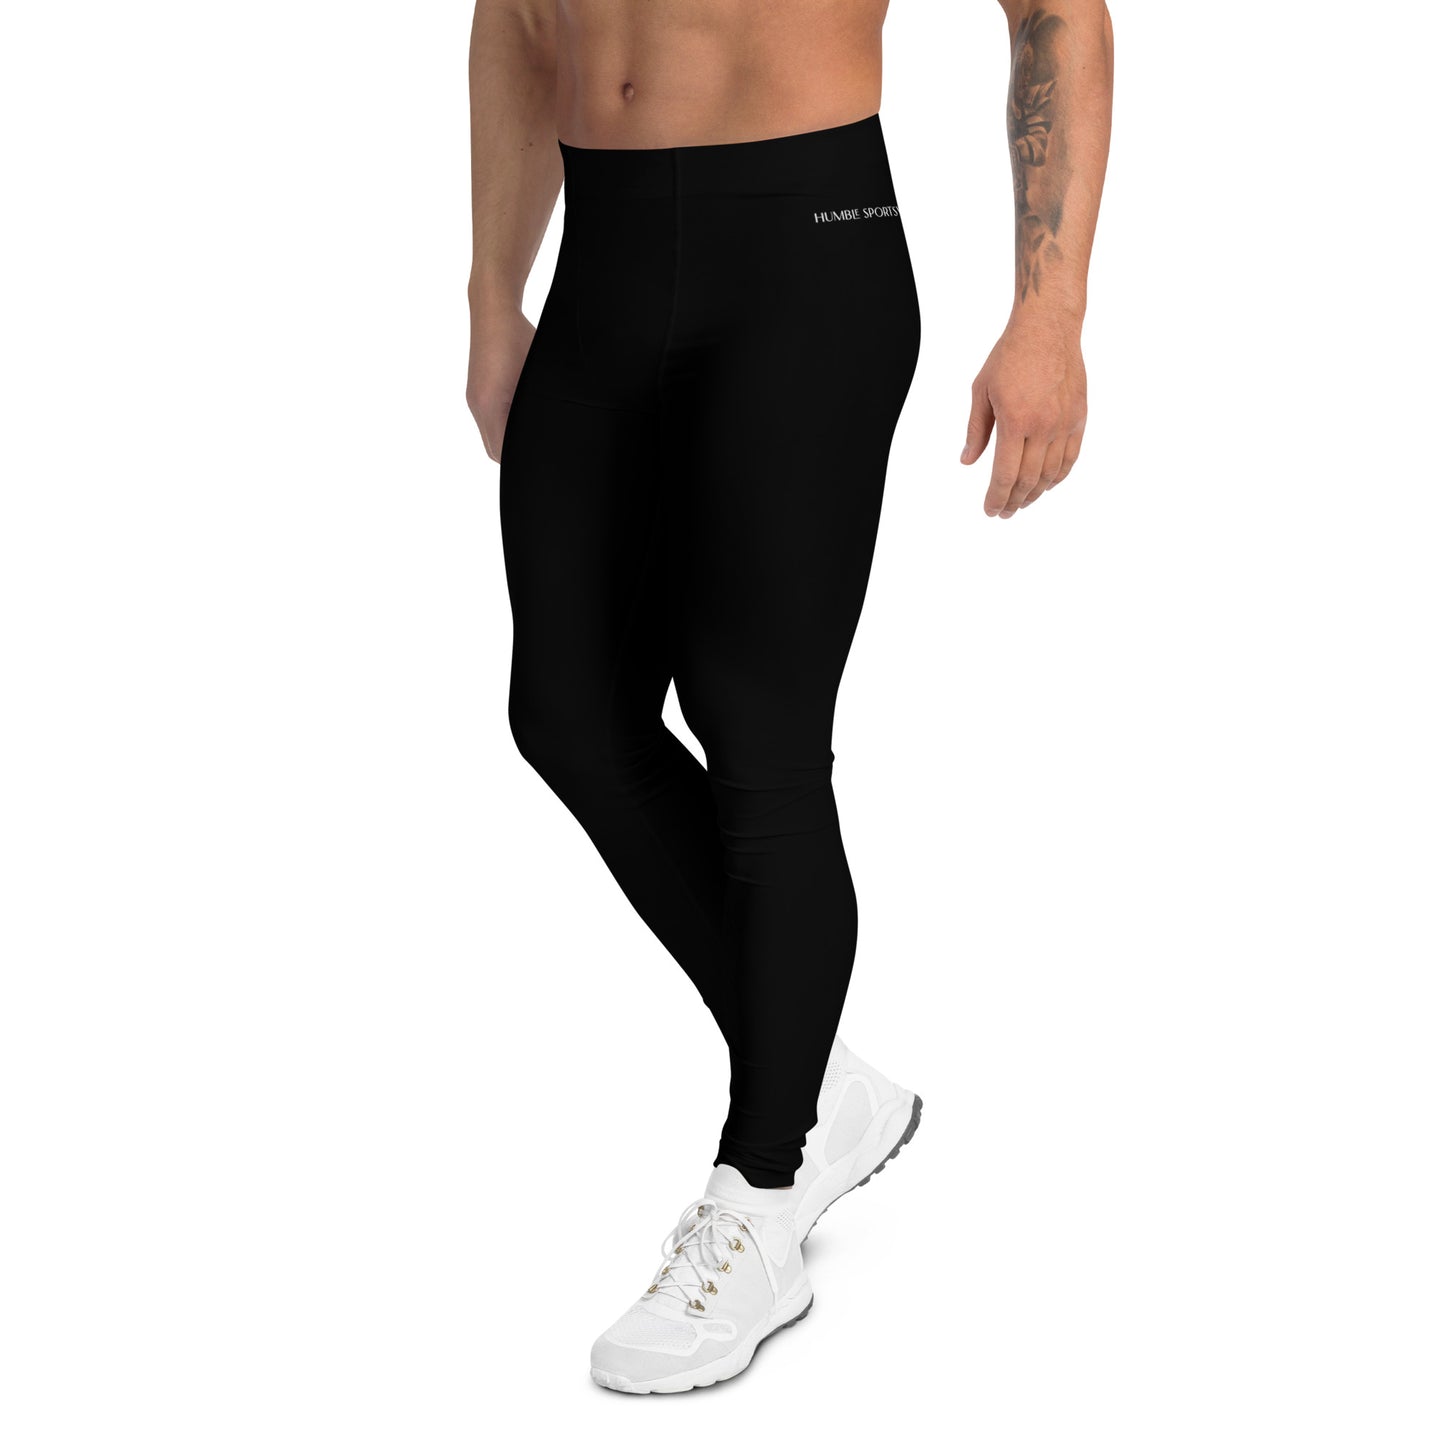 Humble Sportswear, men's leggings, active performance leggings, compression leggings for men, Color Match leggings 